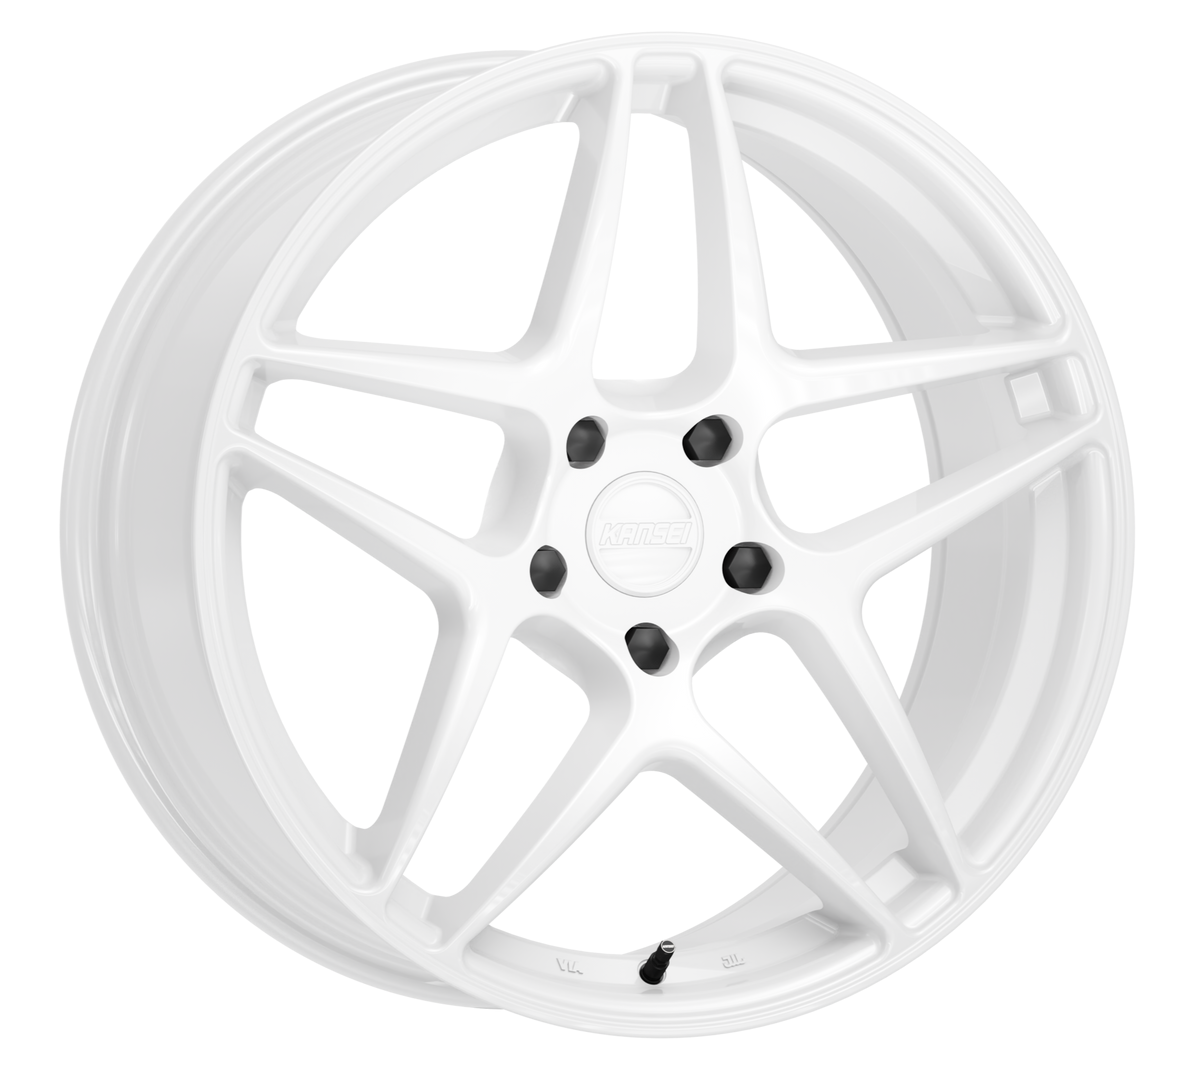 K15W ASTRO Wheel, Size: 19" x 10.50", Bolt Pattern: 5 x 120 mm, Backspace: 7.13" [Finish: Gloss White]